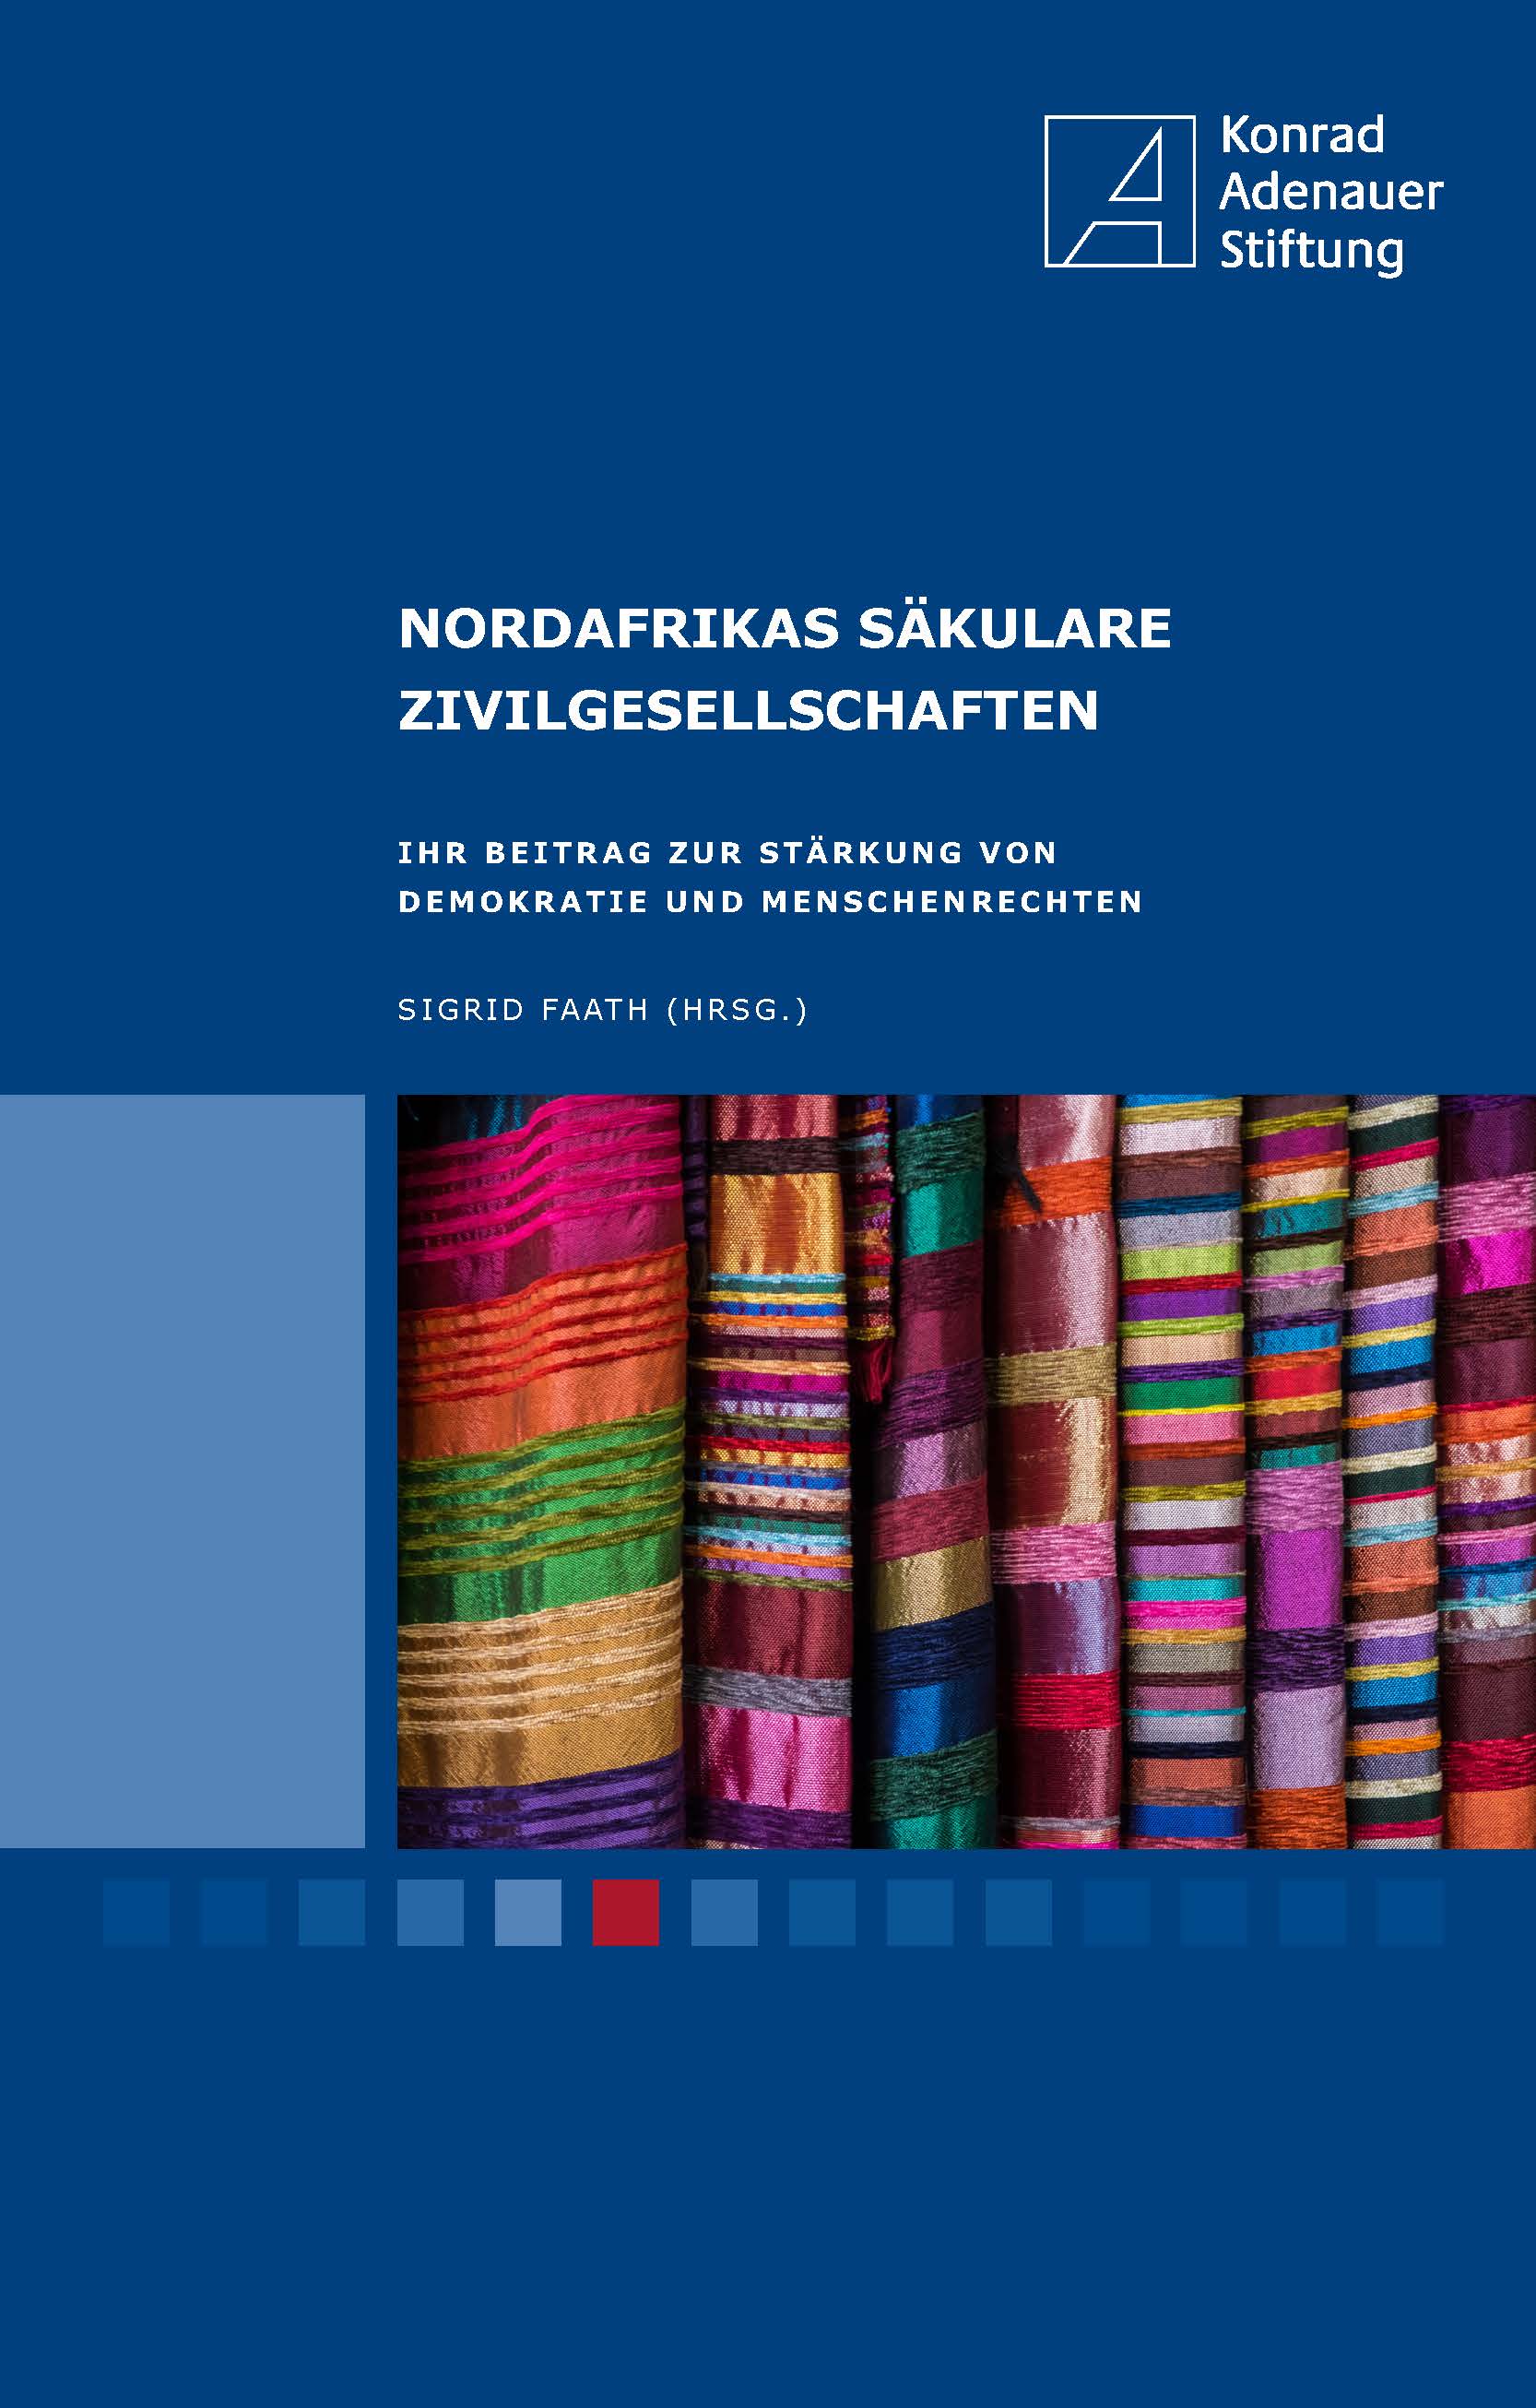 Sigrid Faath (Hrsg.): Nordafrikas säkulare Zivilgesellschaften. Konrad Adenauer Stiftung